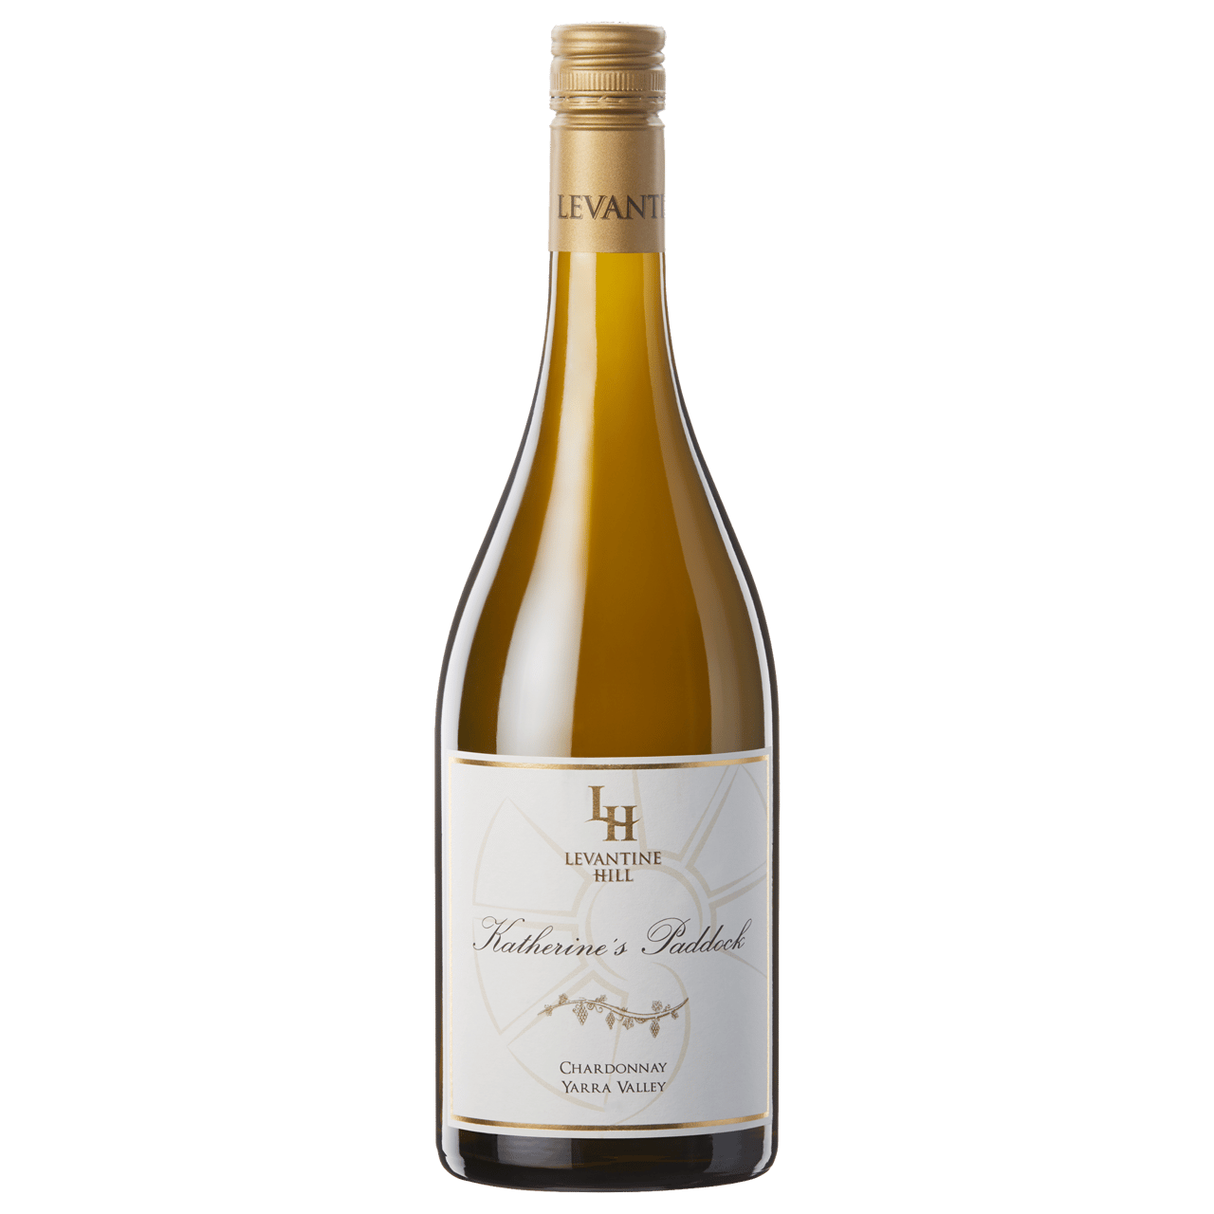 Levantine Hill Katherine’s Paddock Chardonnay, Yarra Valley 2018 (6 Bottles)